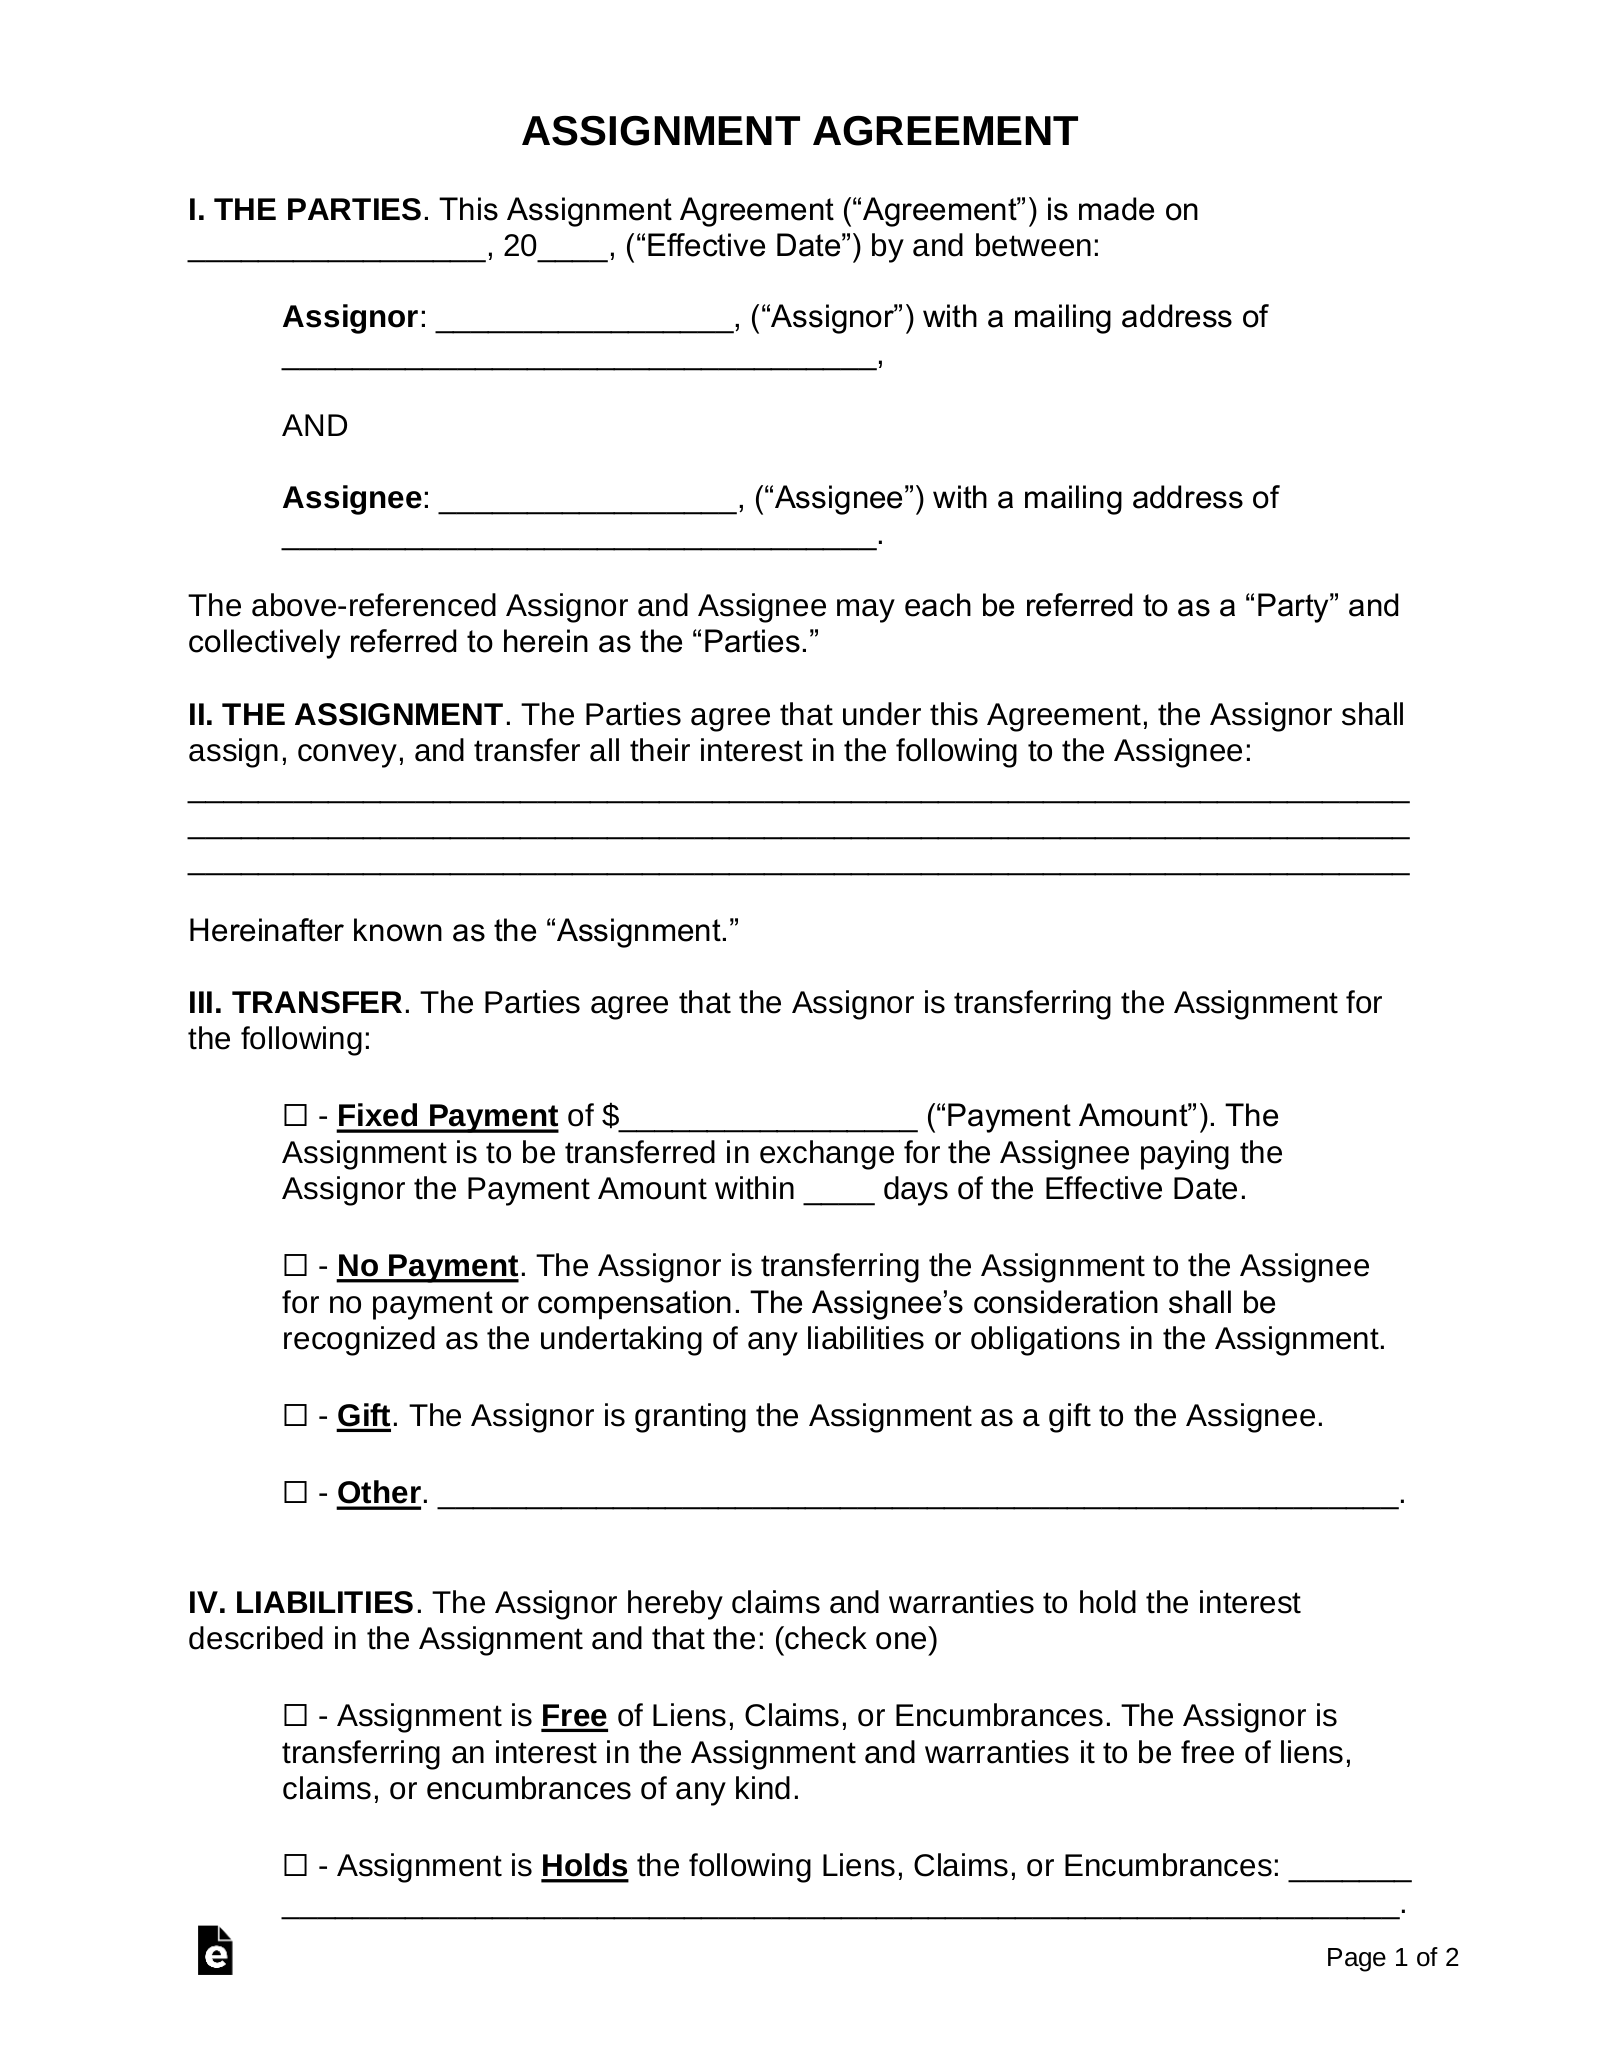 assignment agreement template